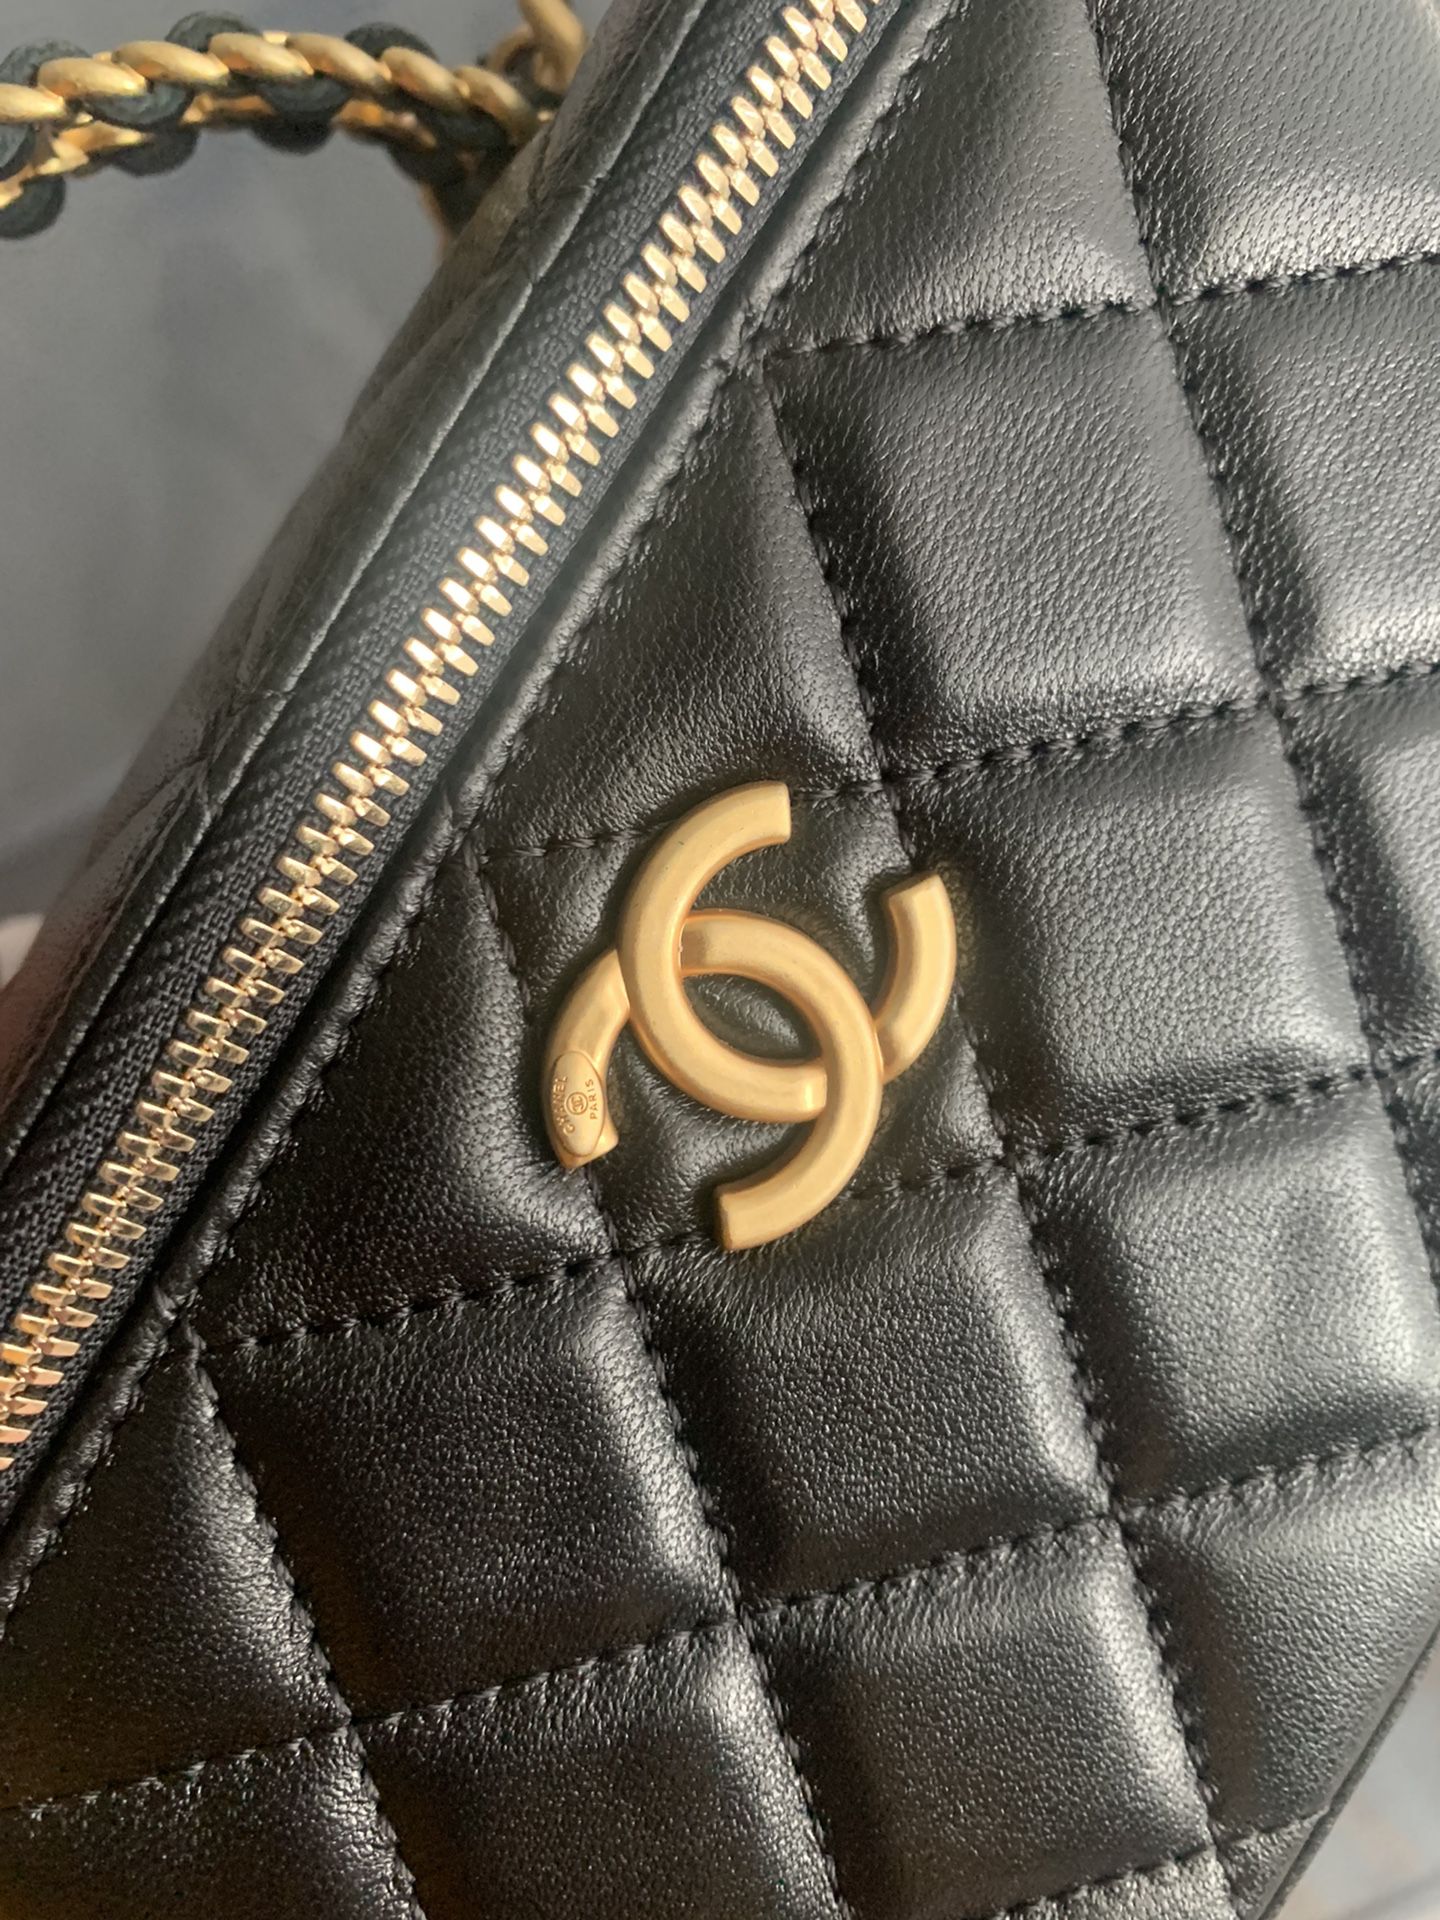 Bag Chanel cosmetic bag Handbag for Sale in Edmonds, WA